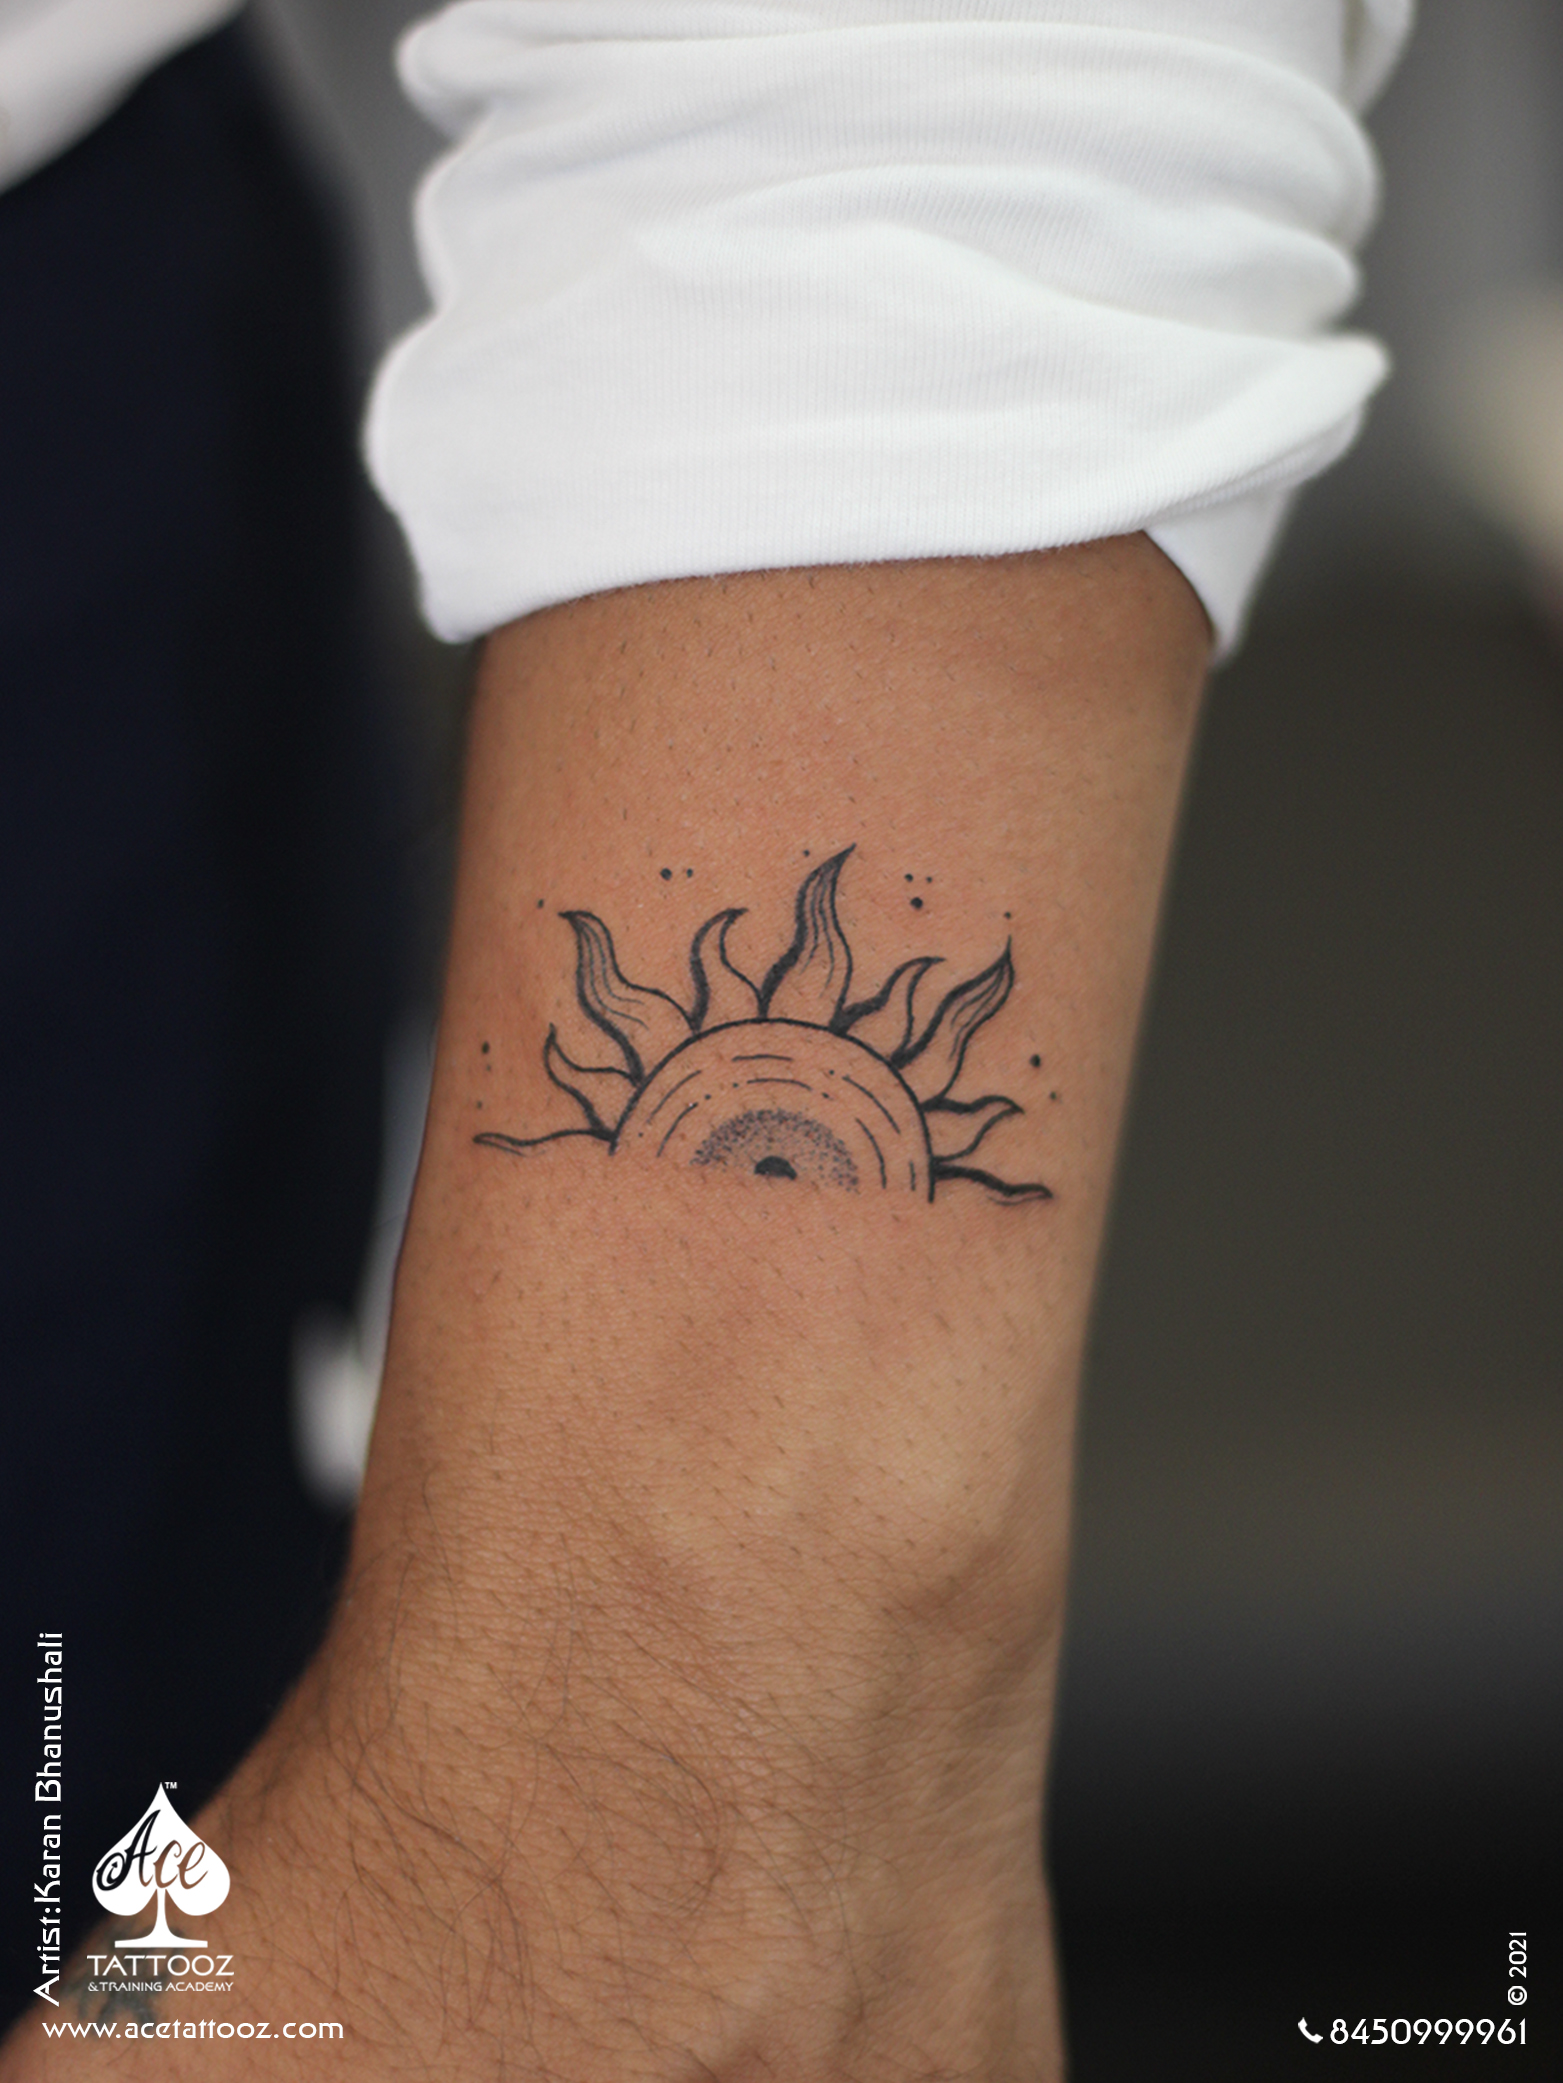 shanku and chakra tattoo in black ink on upper arm.. - YouTube